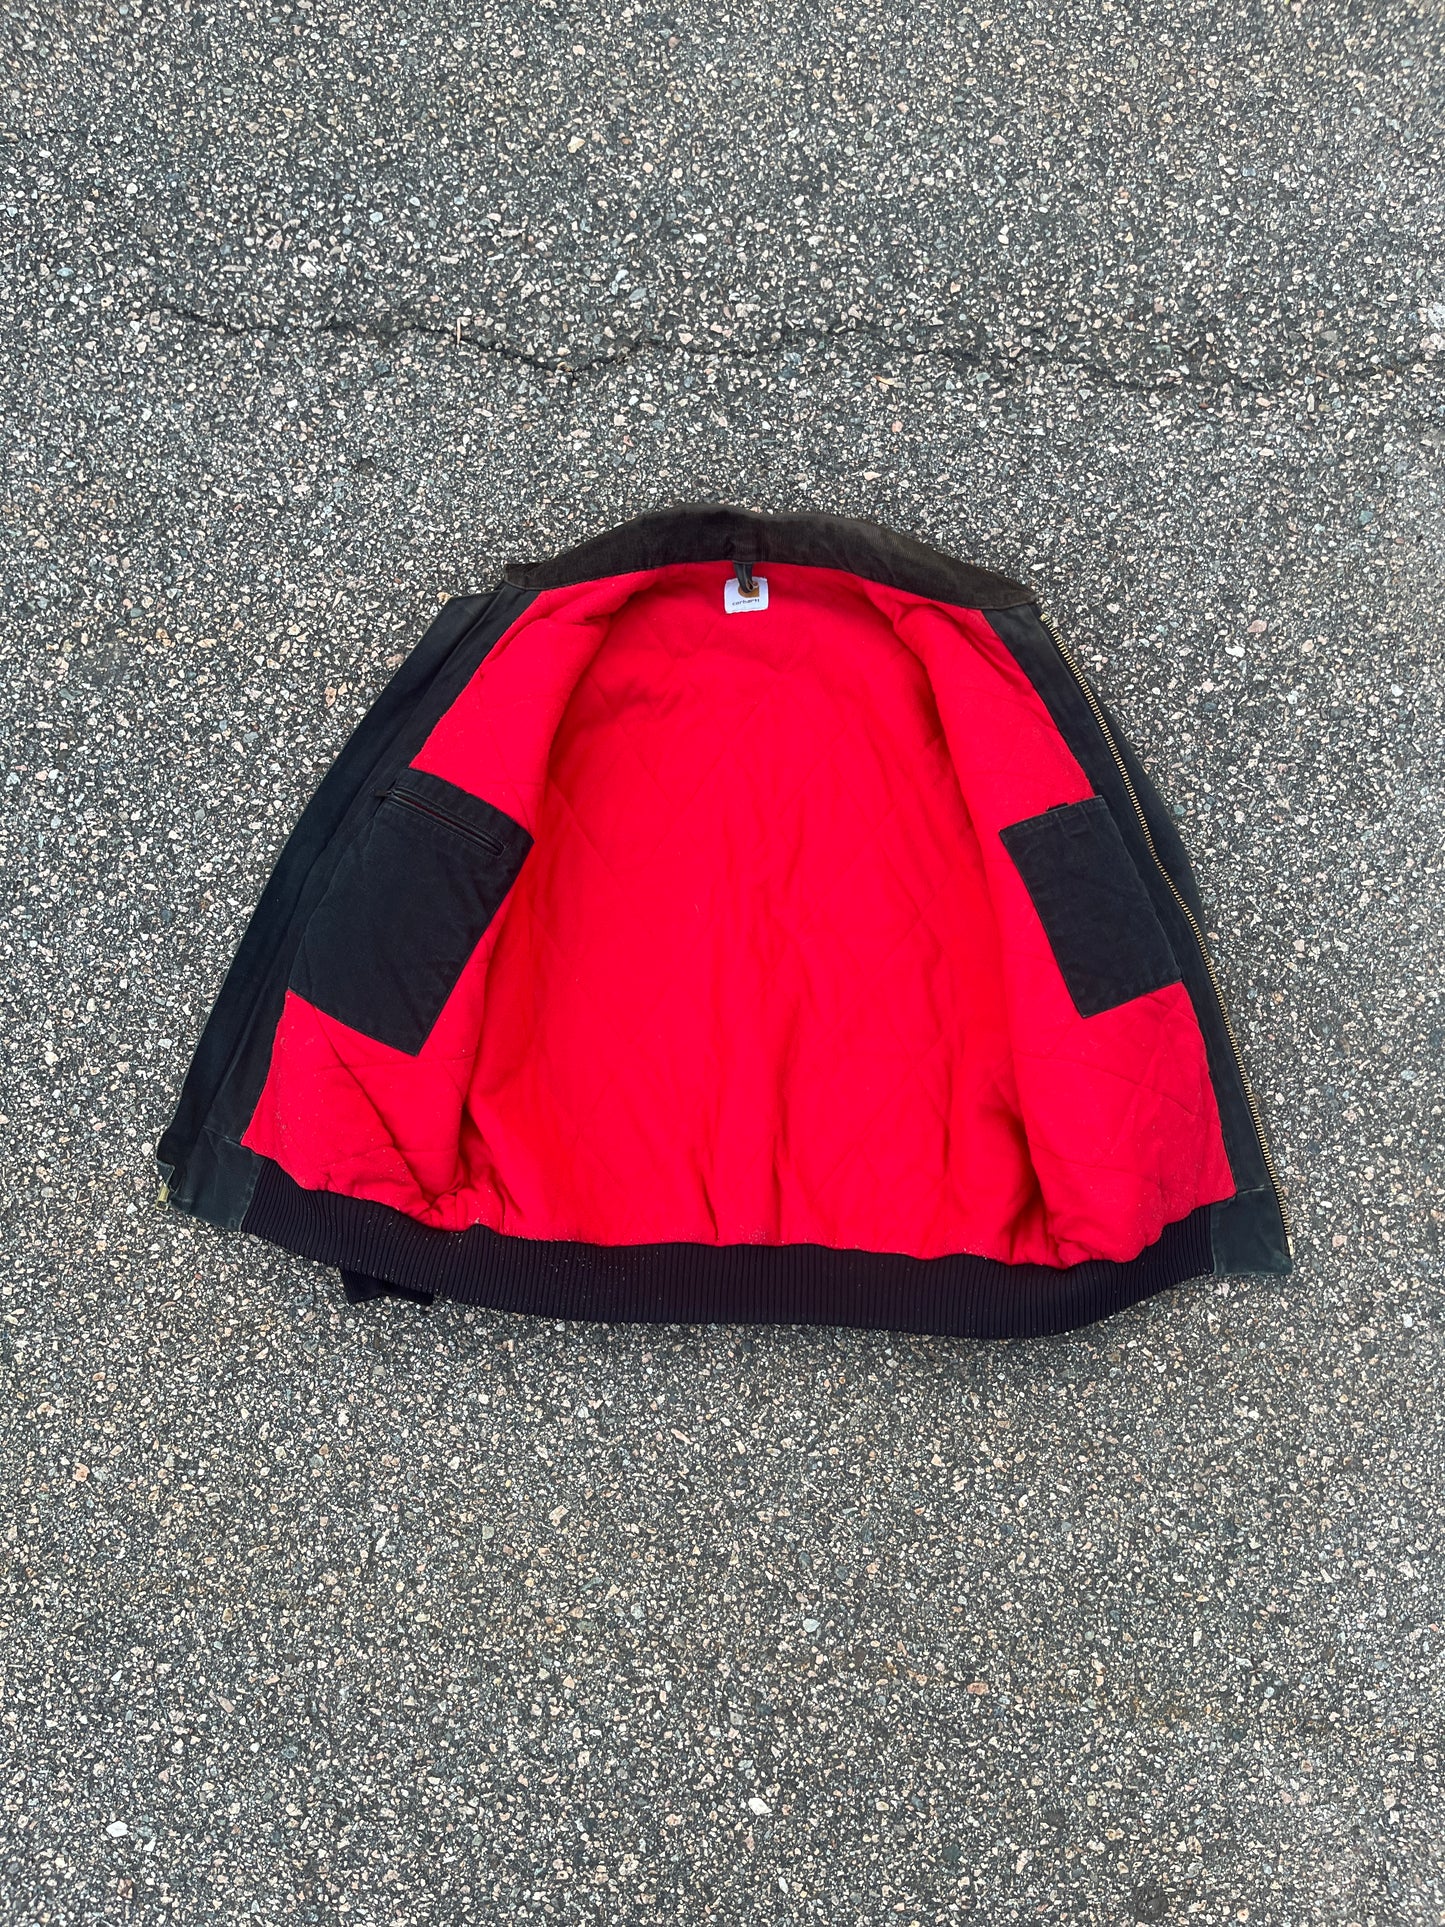 Faded Black Carhartt Santa Fe Jacket - XL Tall